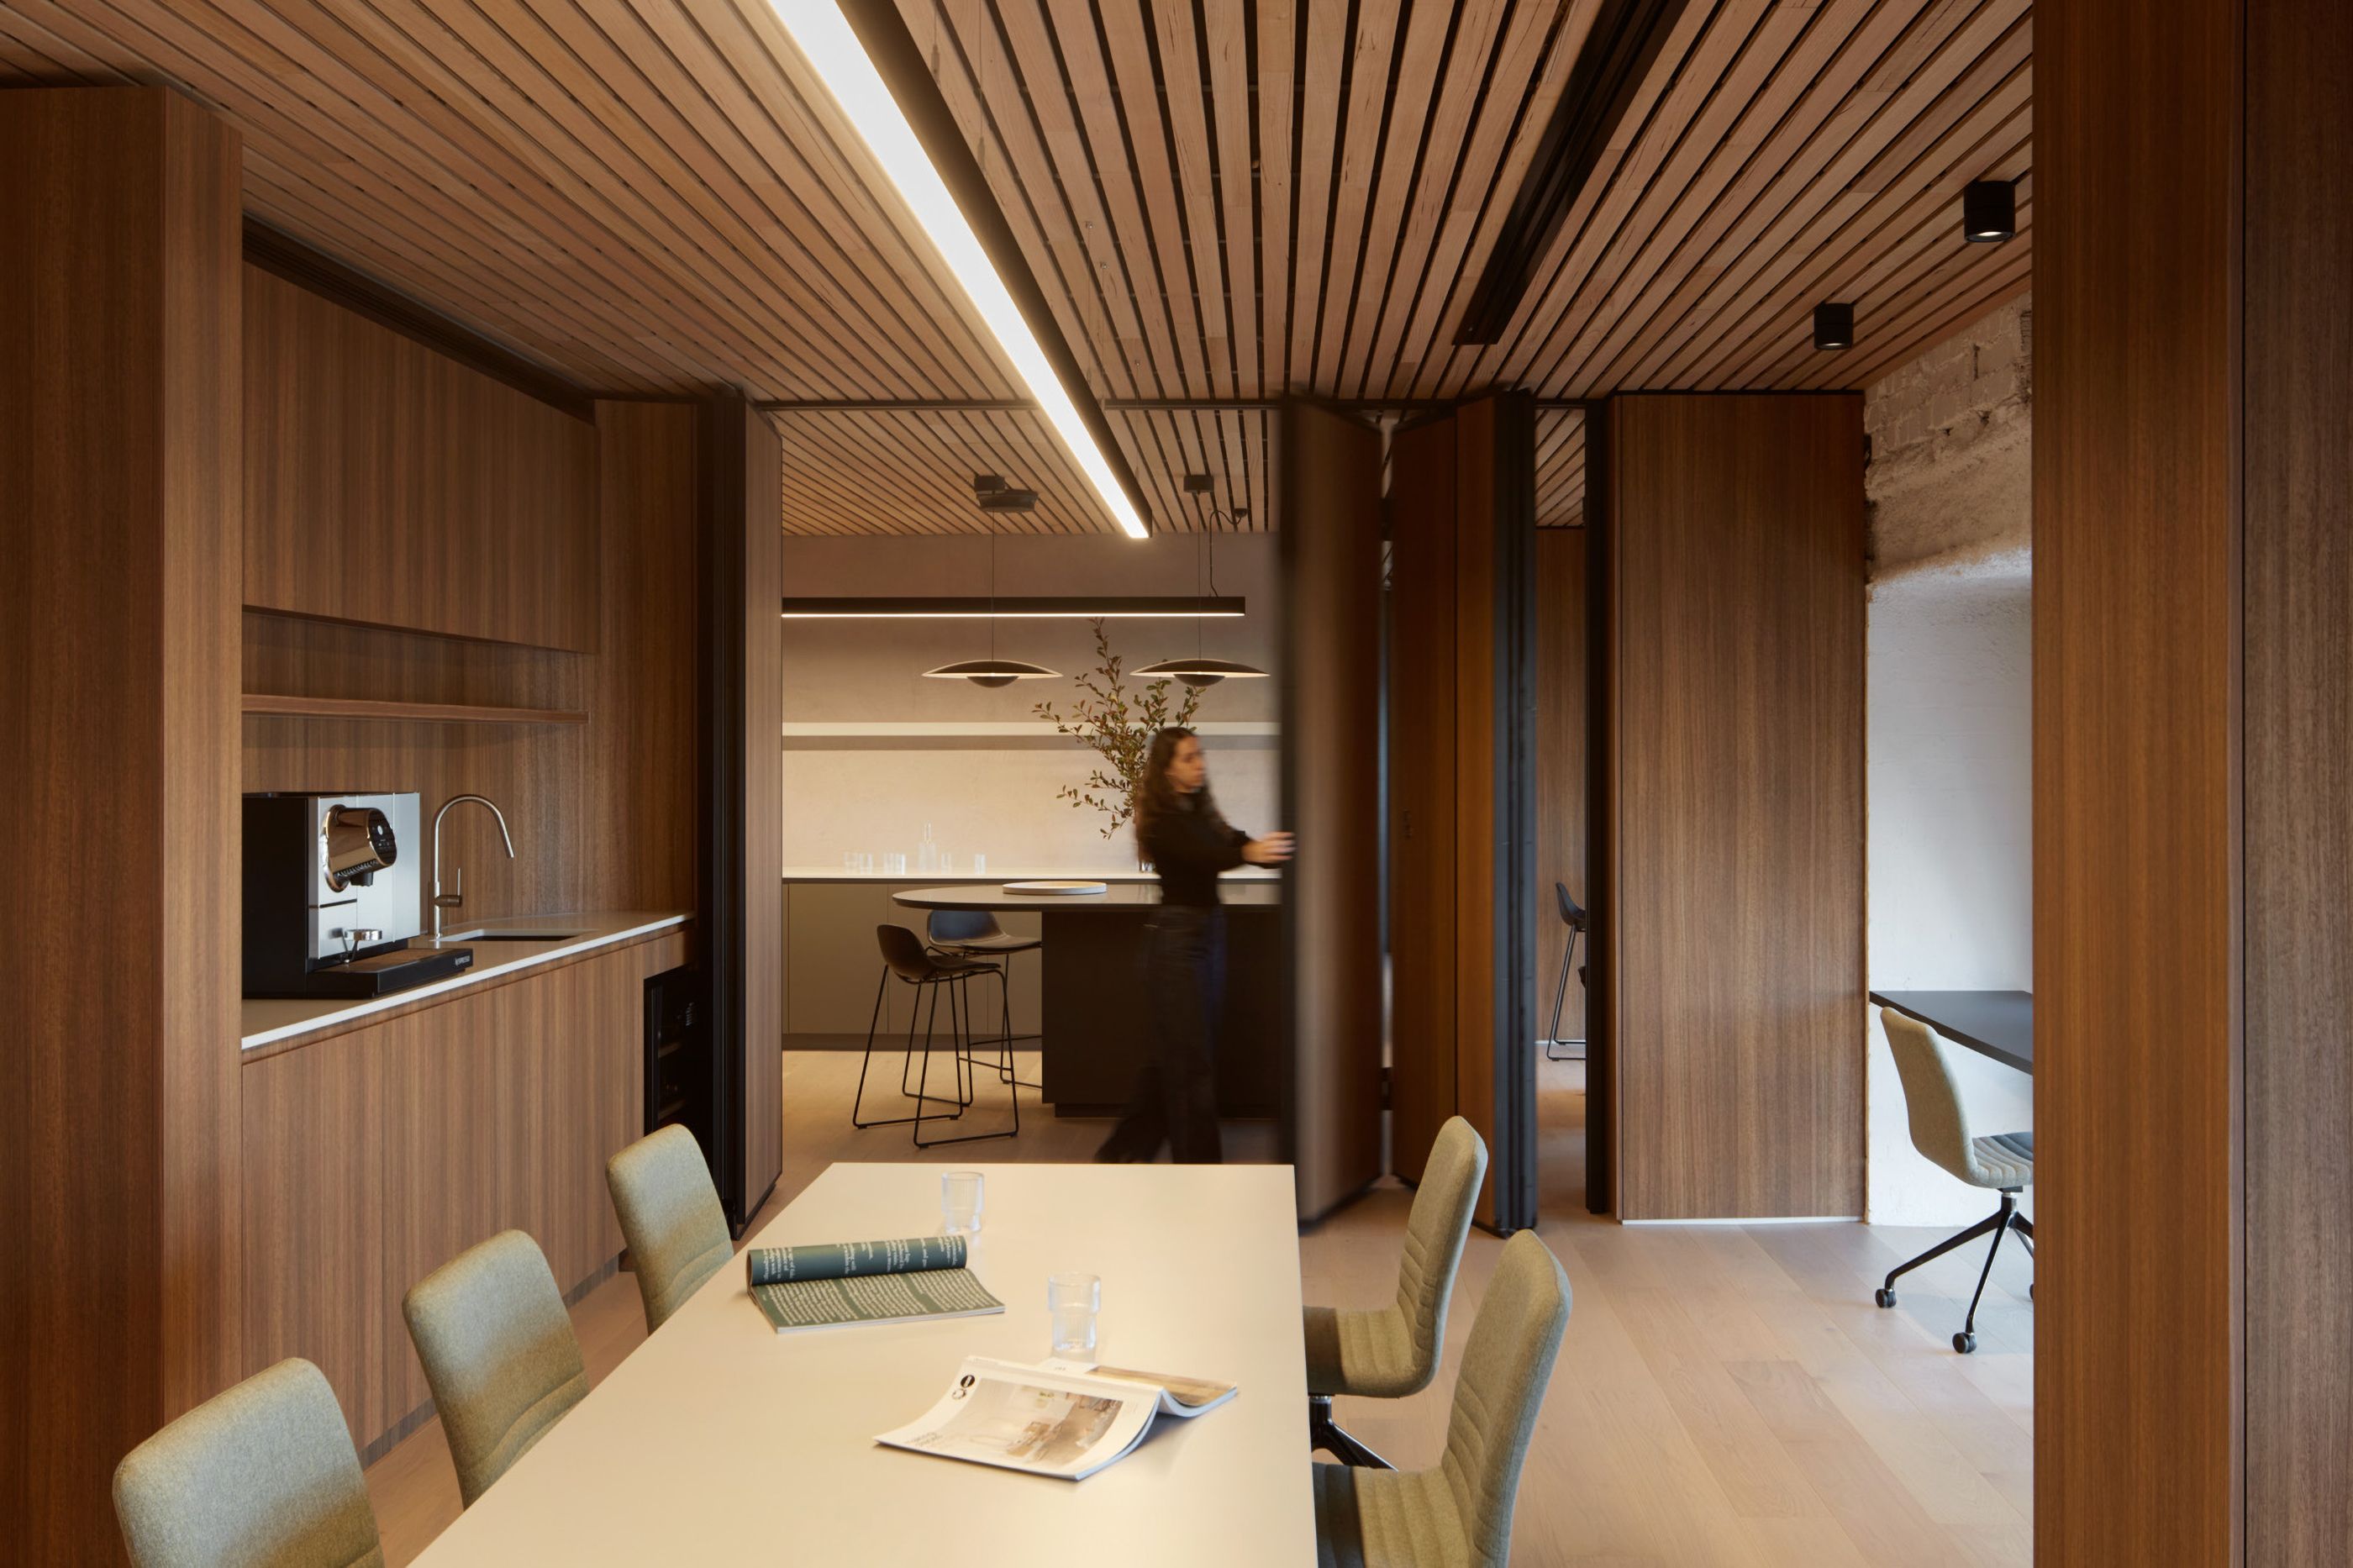 image of Flinders St workplace - flexible working space